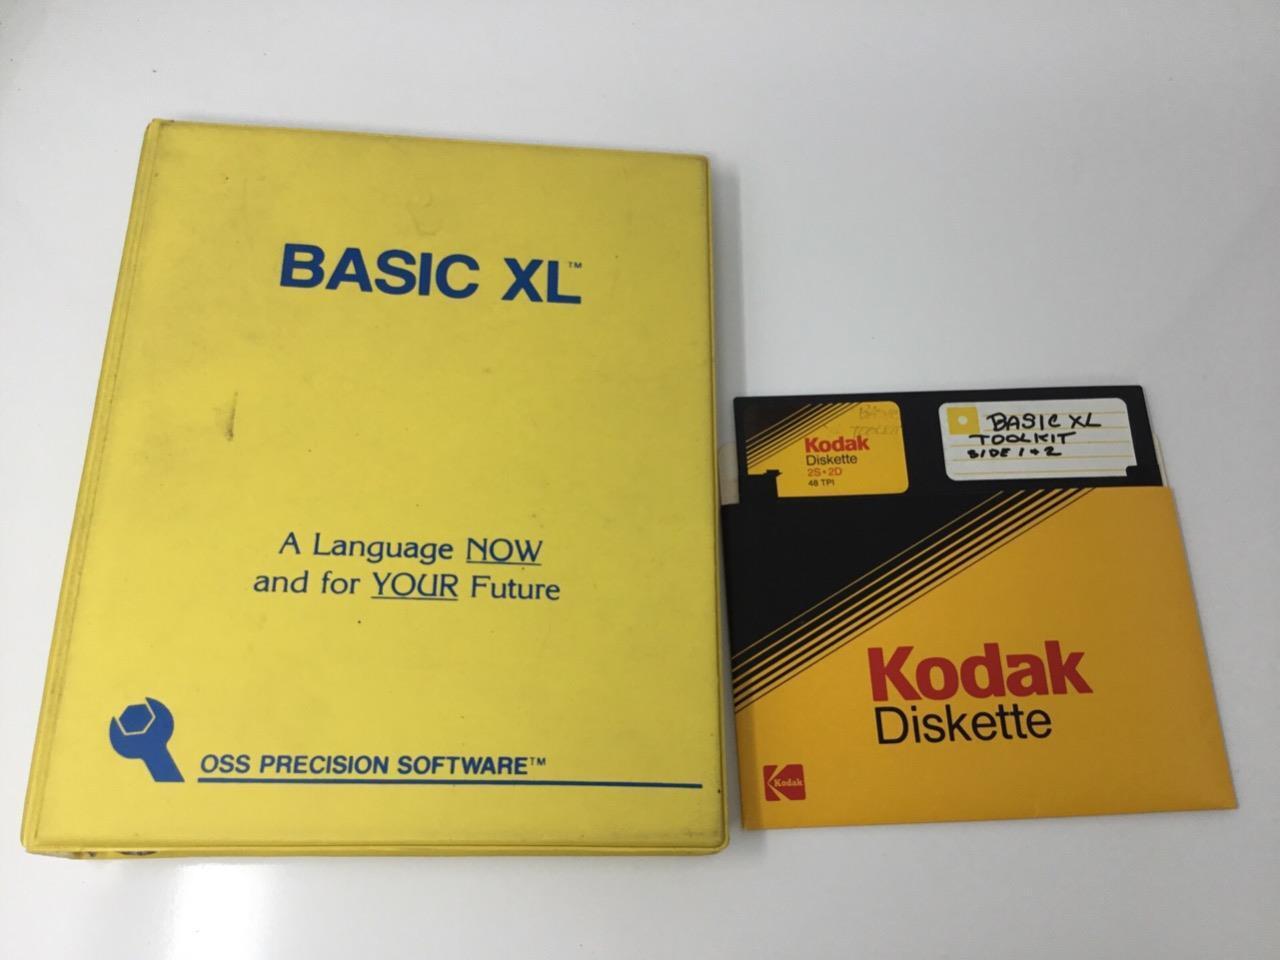 Atari Basic XL Oss Precision Software w/ Diskette and Manual